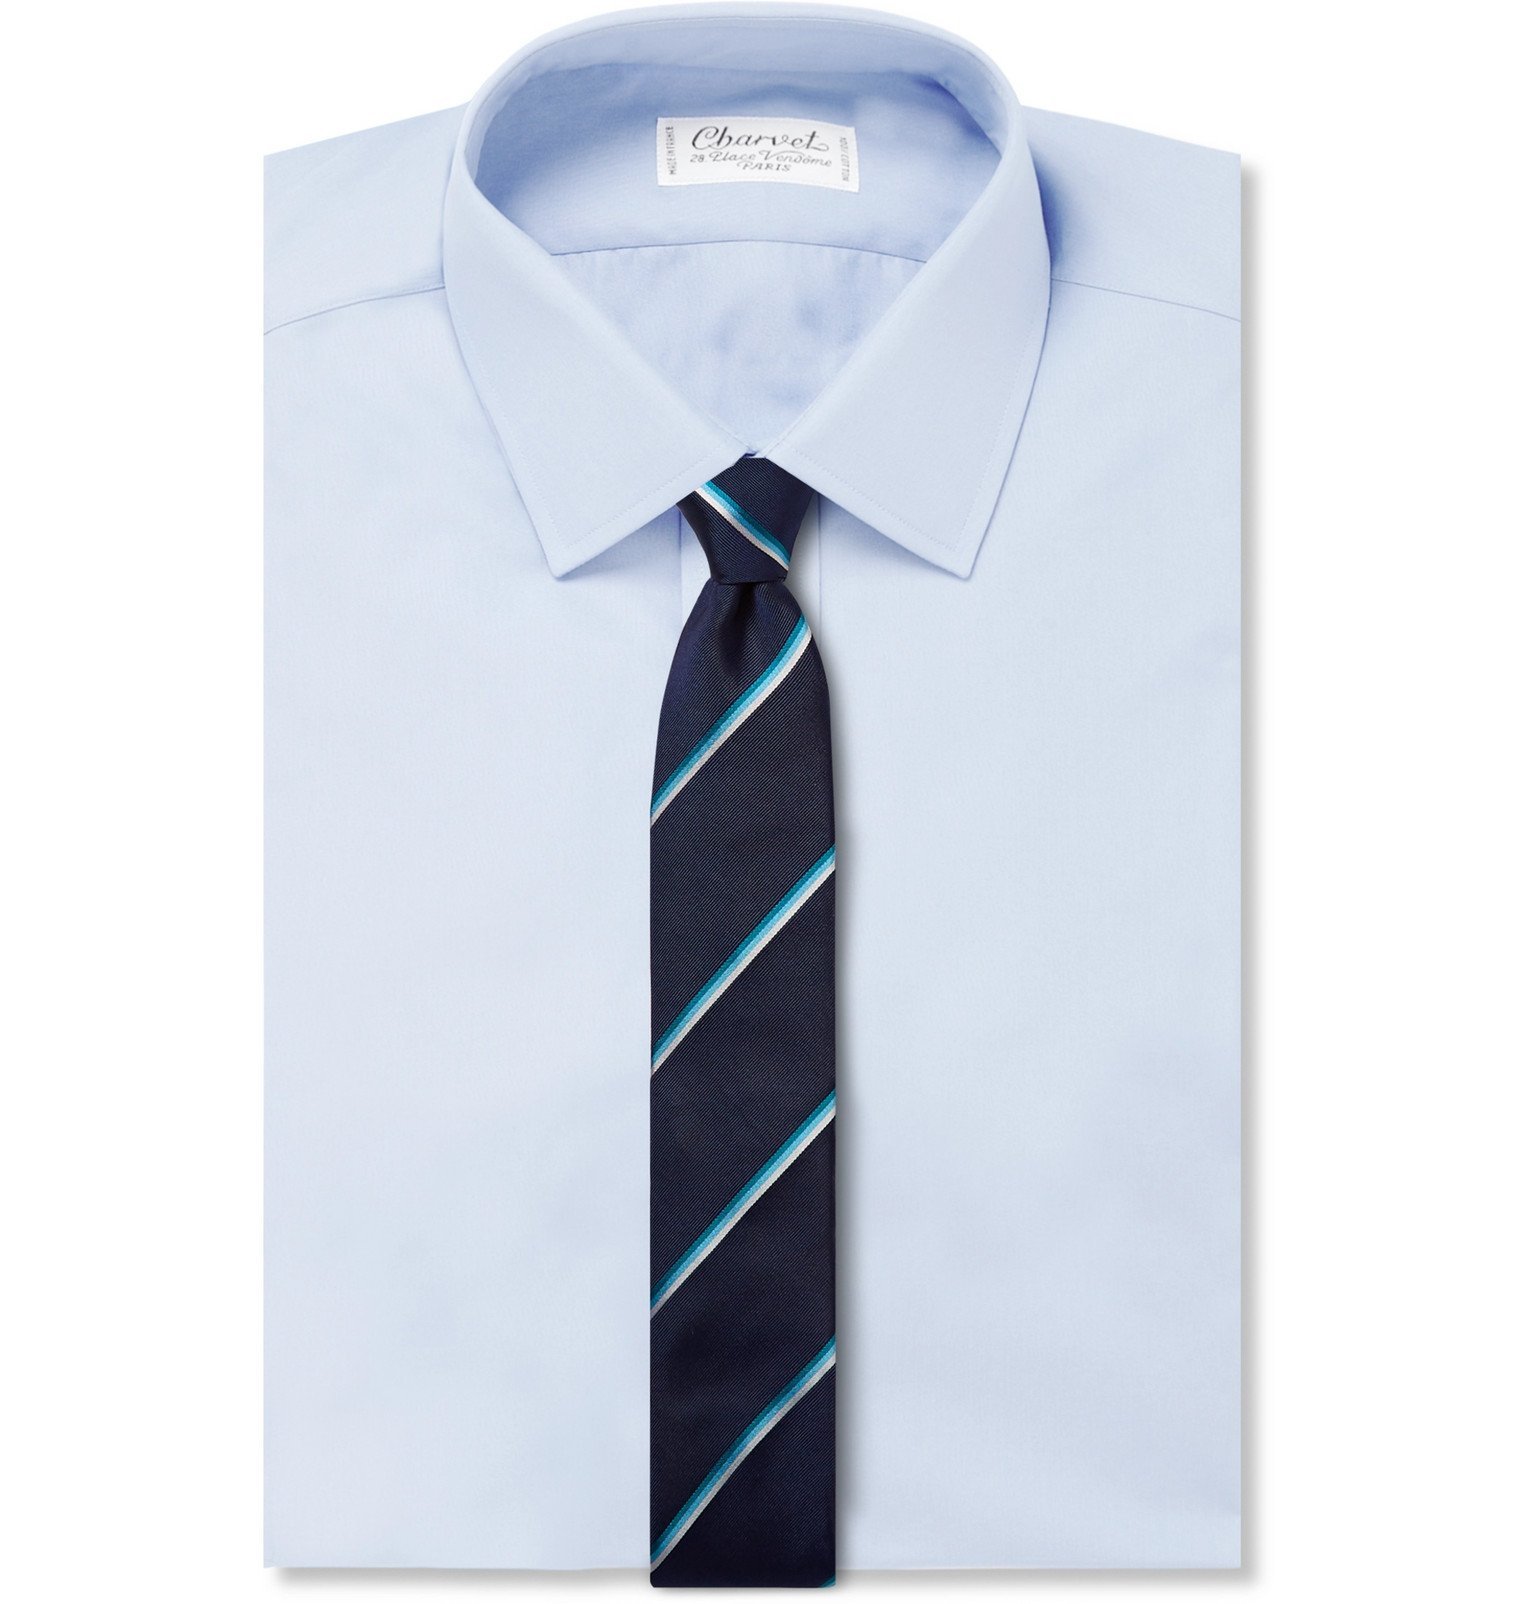 Paul Smith Stripe Tie Pink & White Stripe Tie 100% Silk Made in Italy 